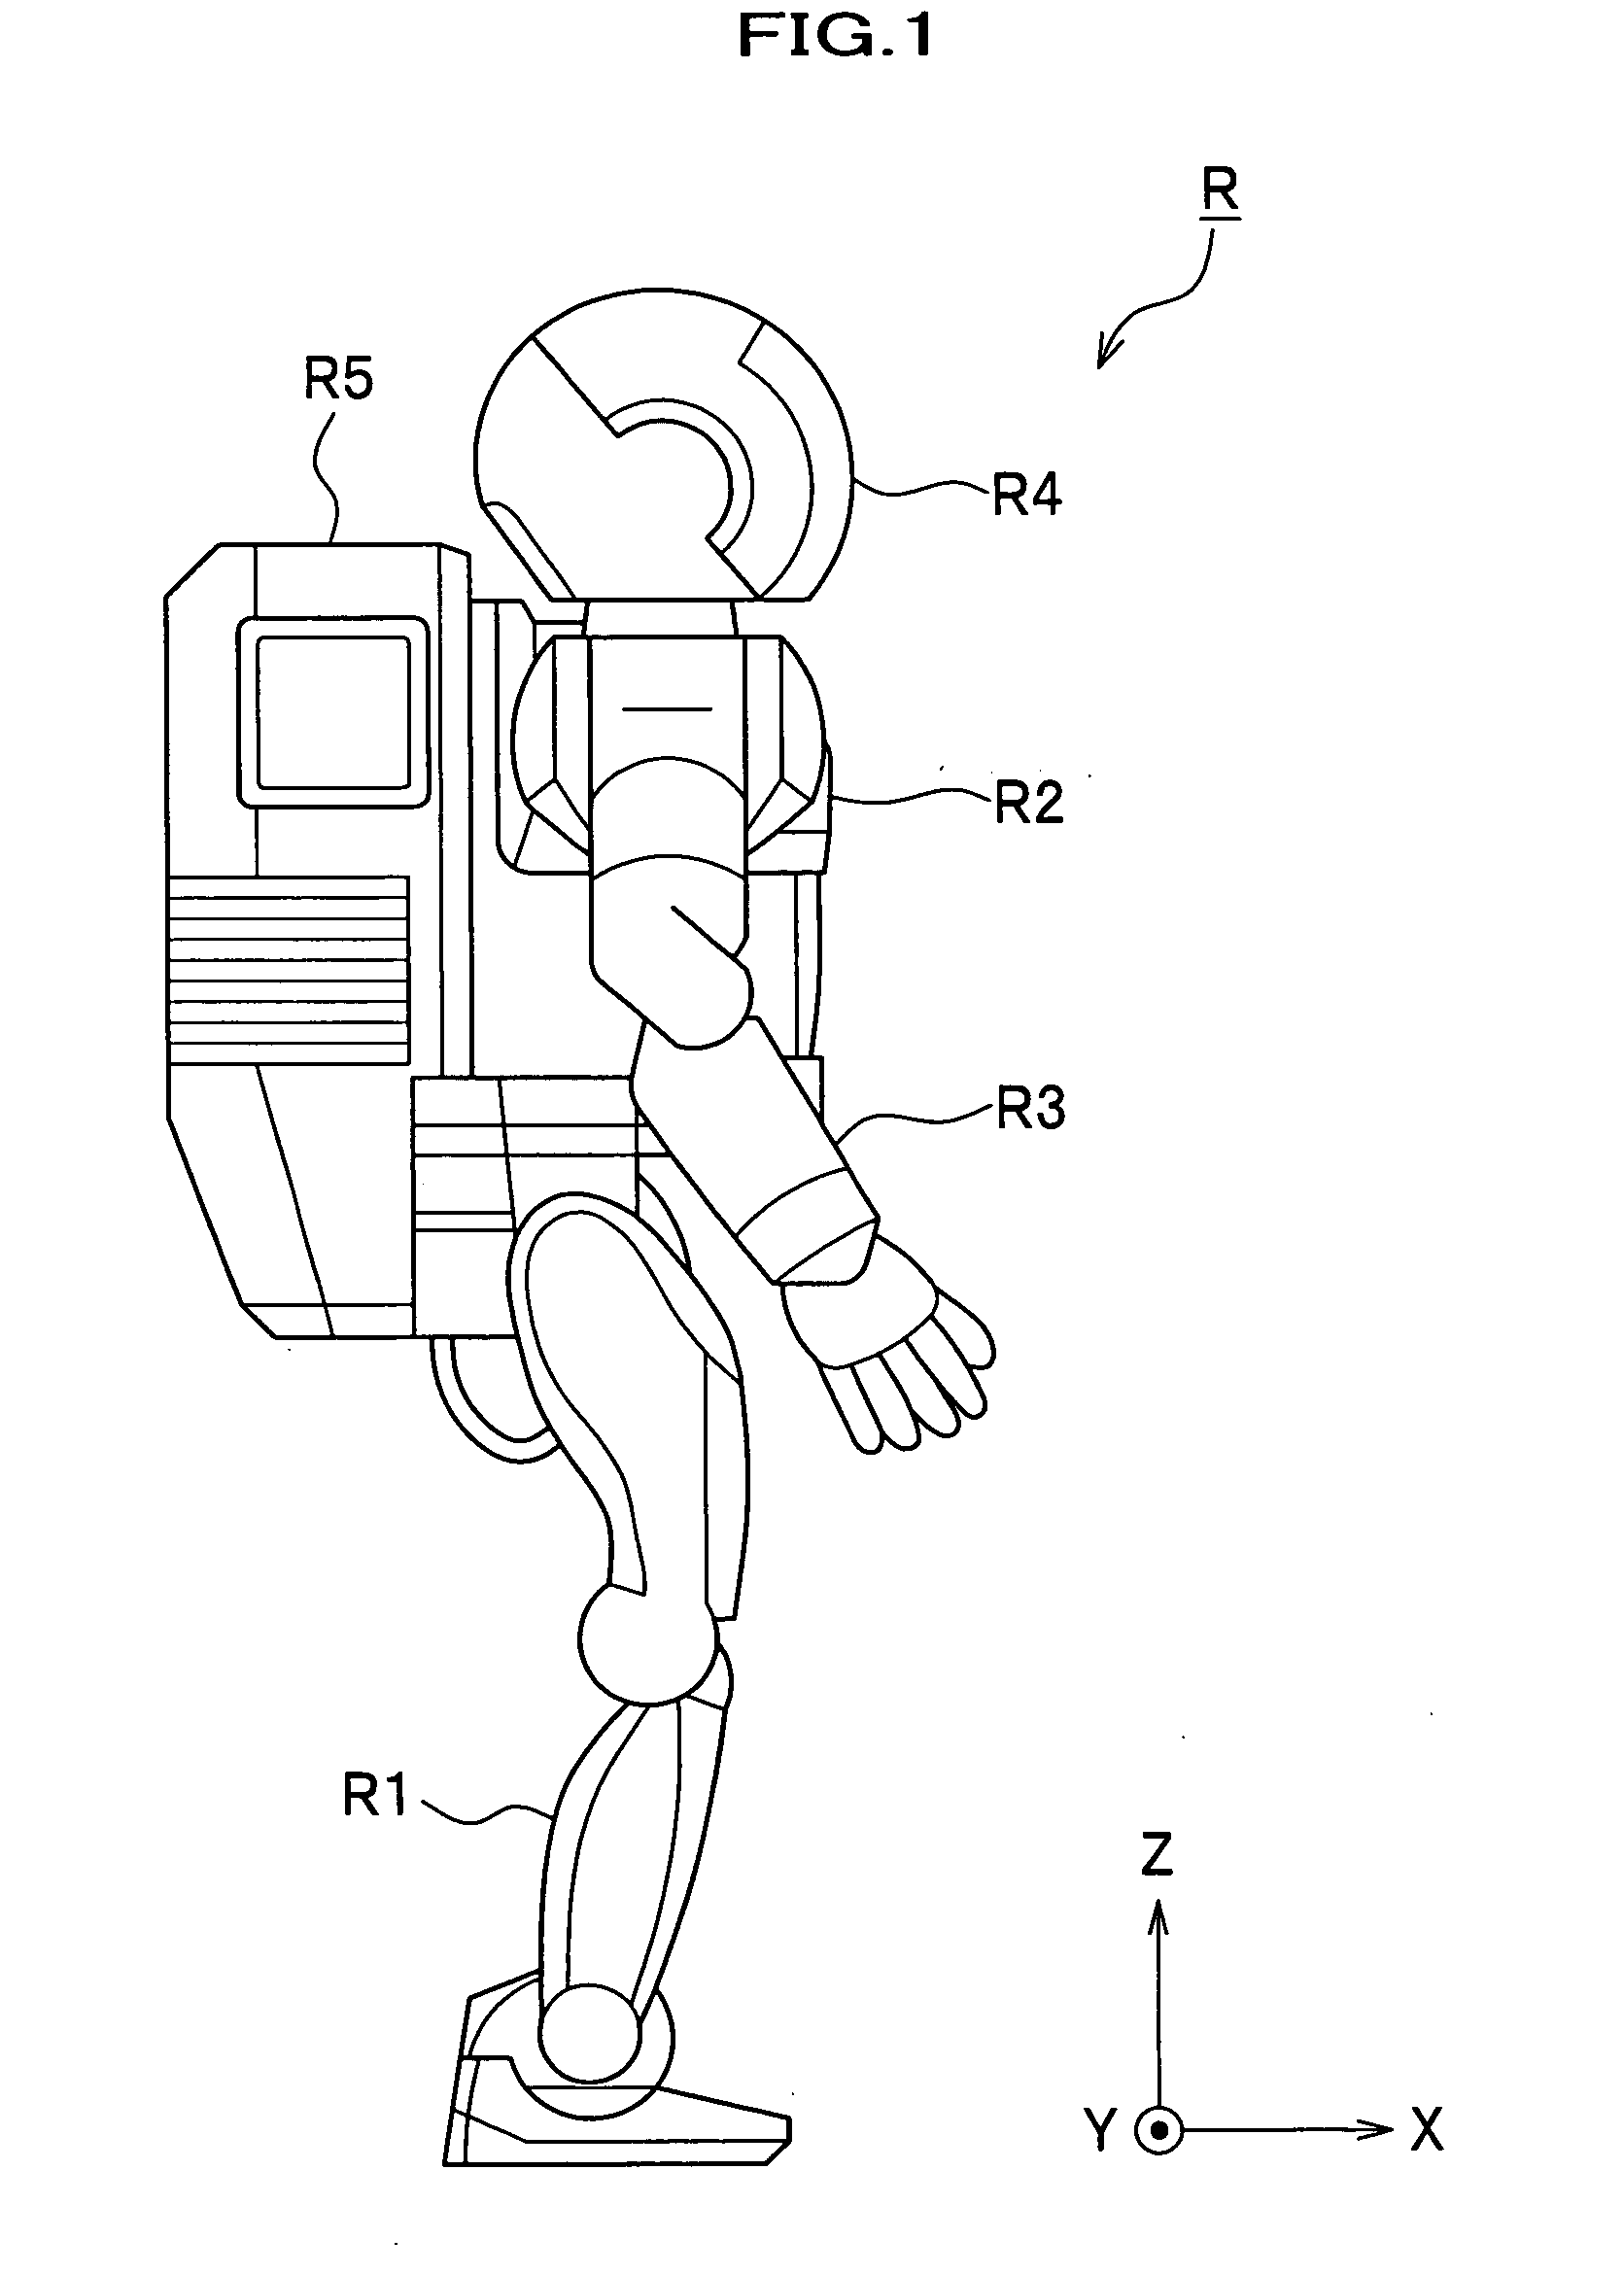 Legged mobile robot controller, legged mobile robot and legged mobile robot control method